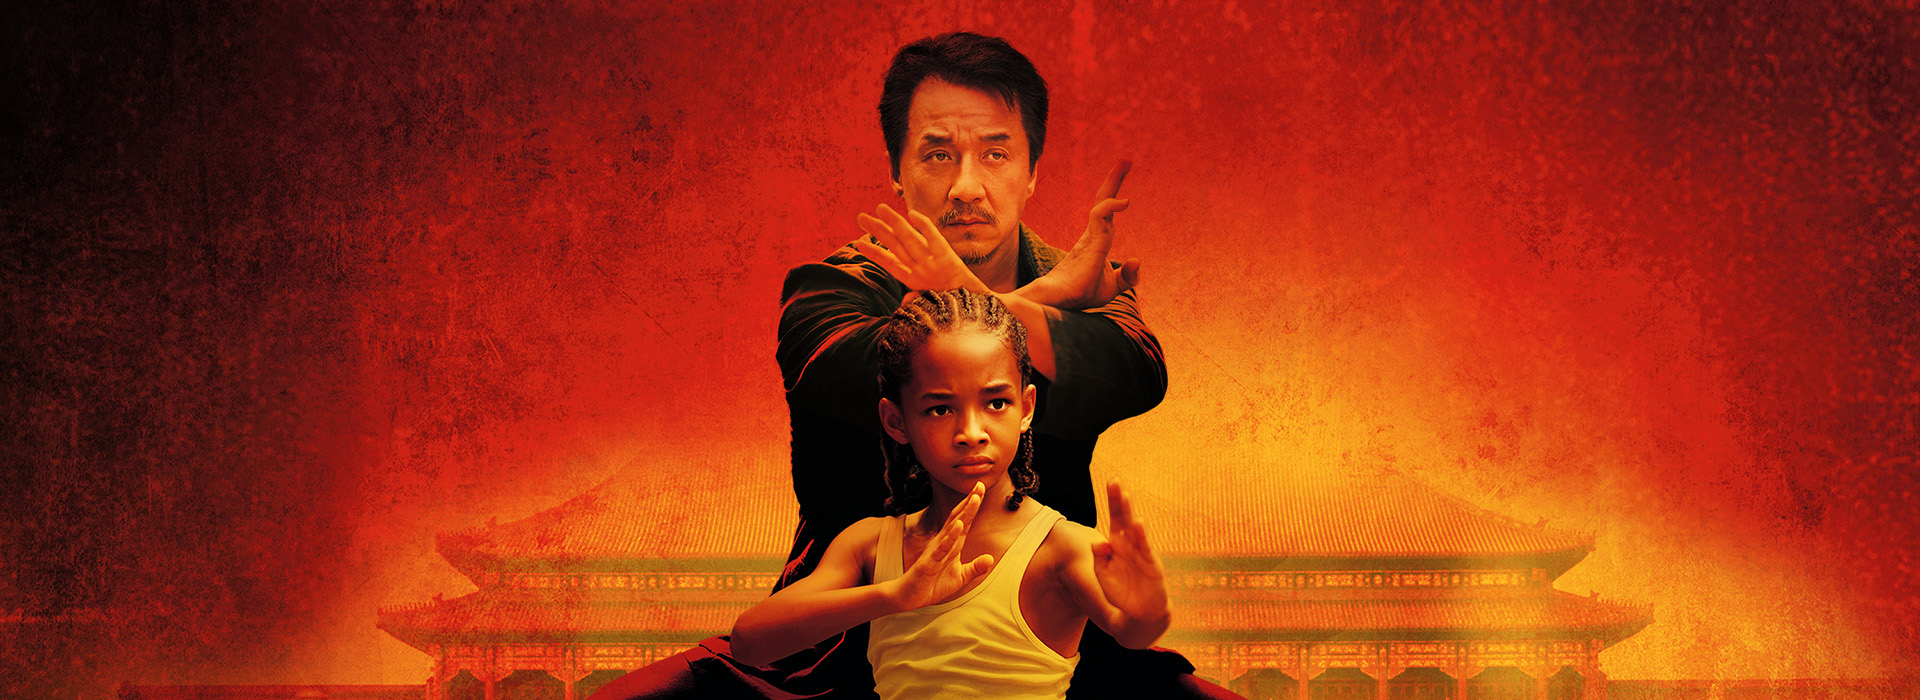 Movie poster The Karate Kid